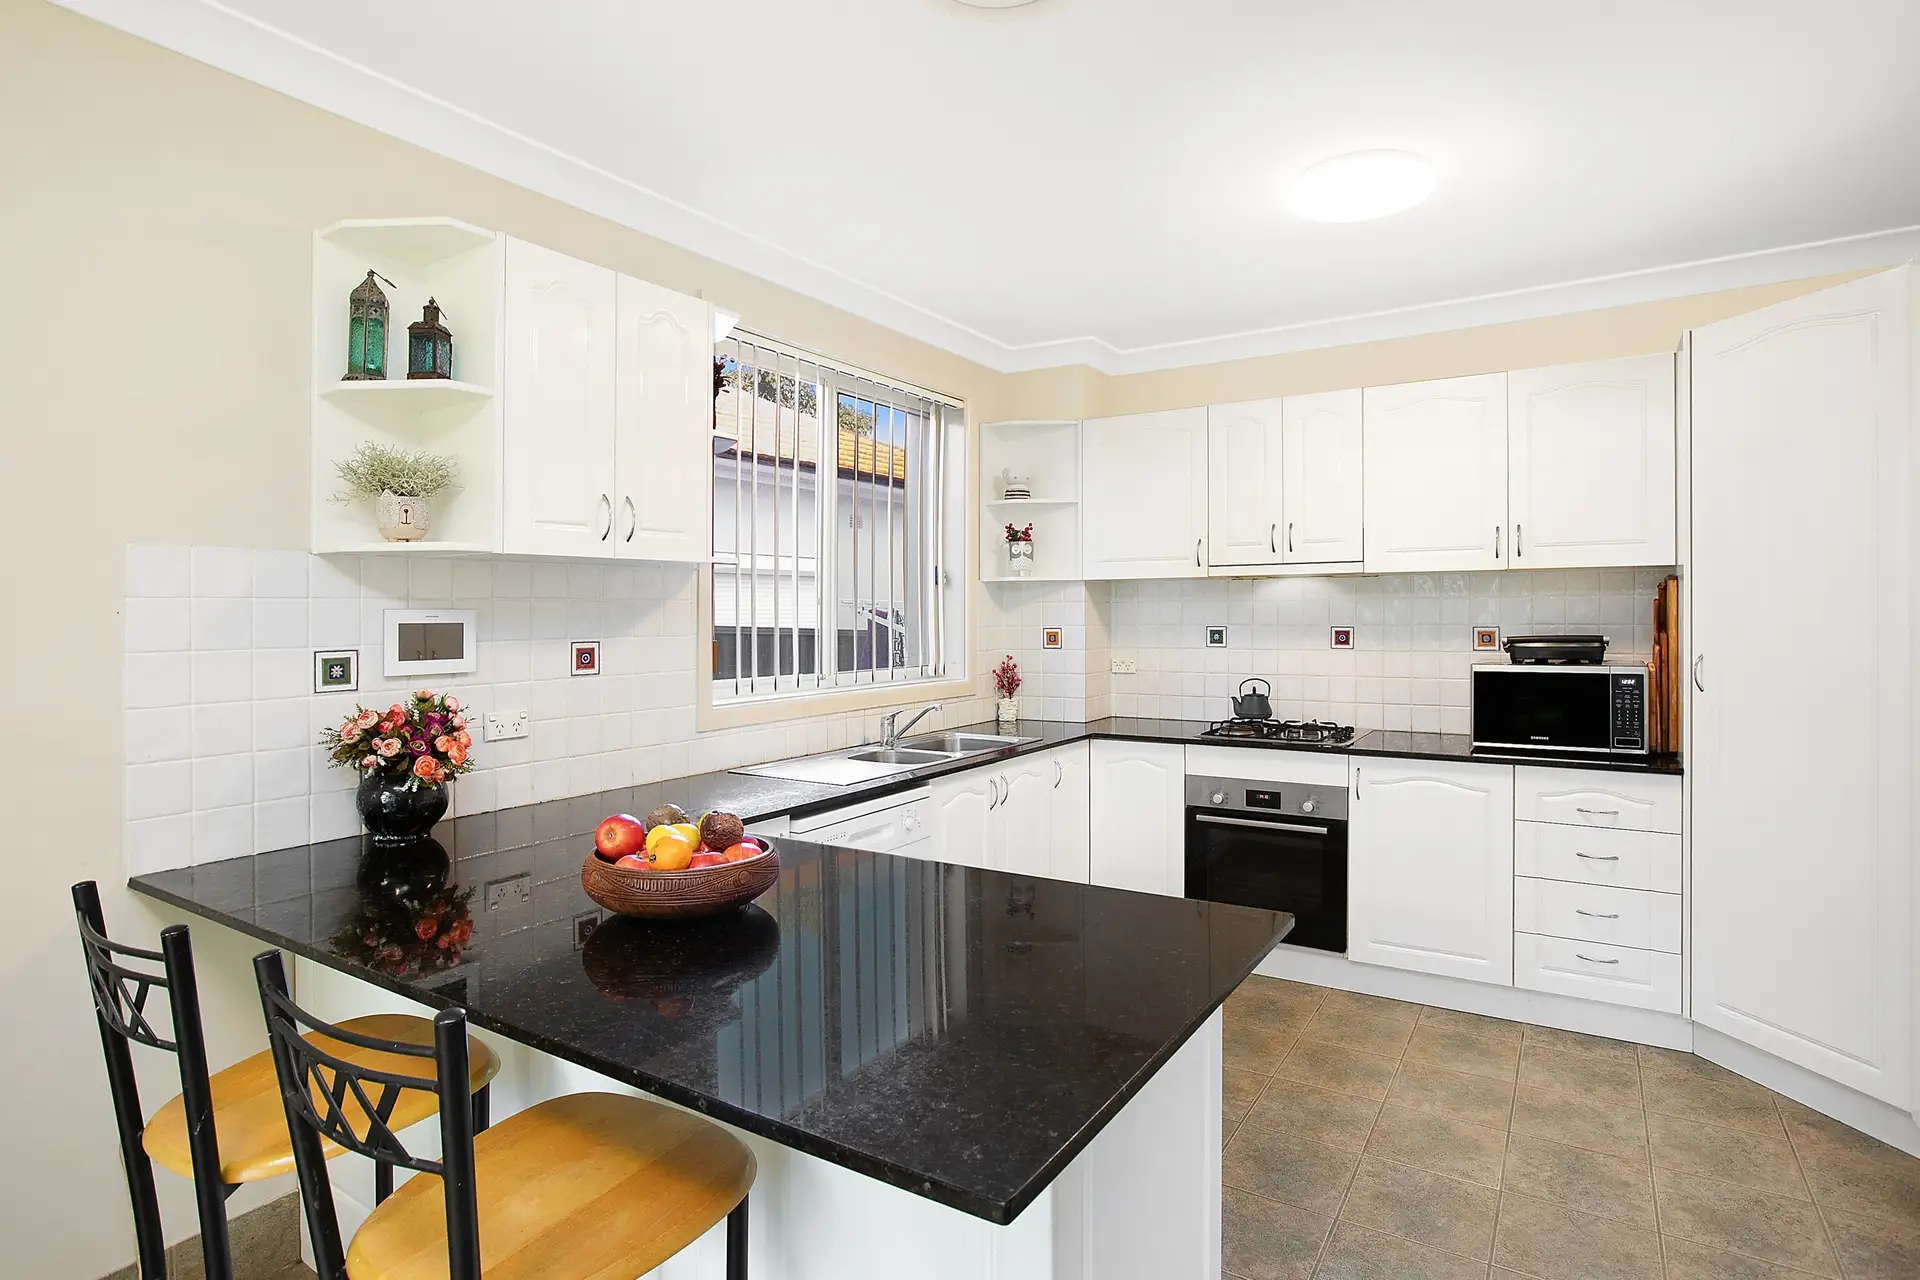 37 Dean Street, Strathfield South Sold by Richard Matthews Real Estate - image 2